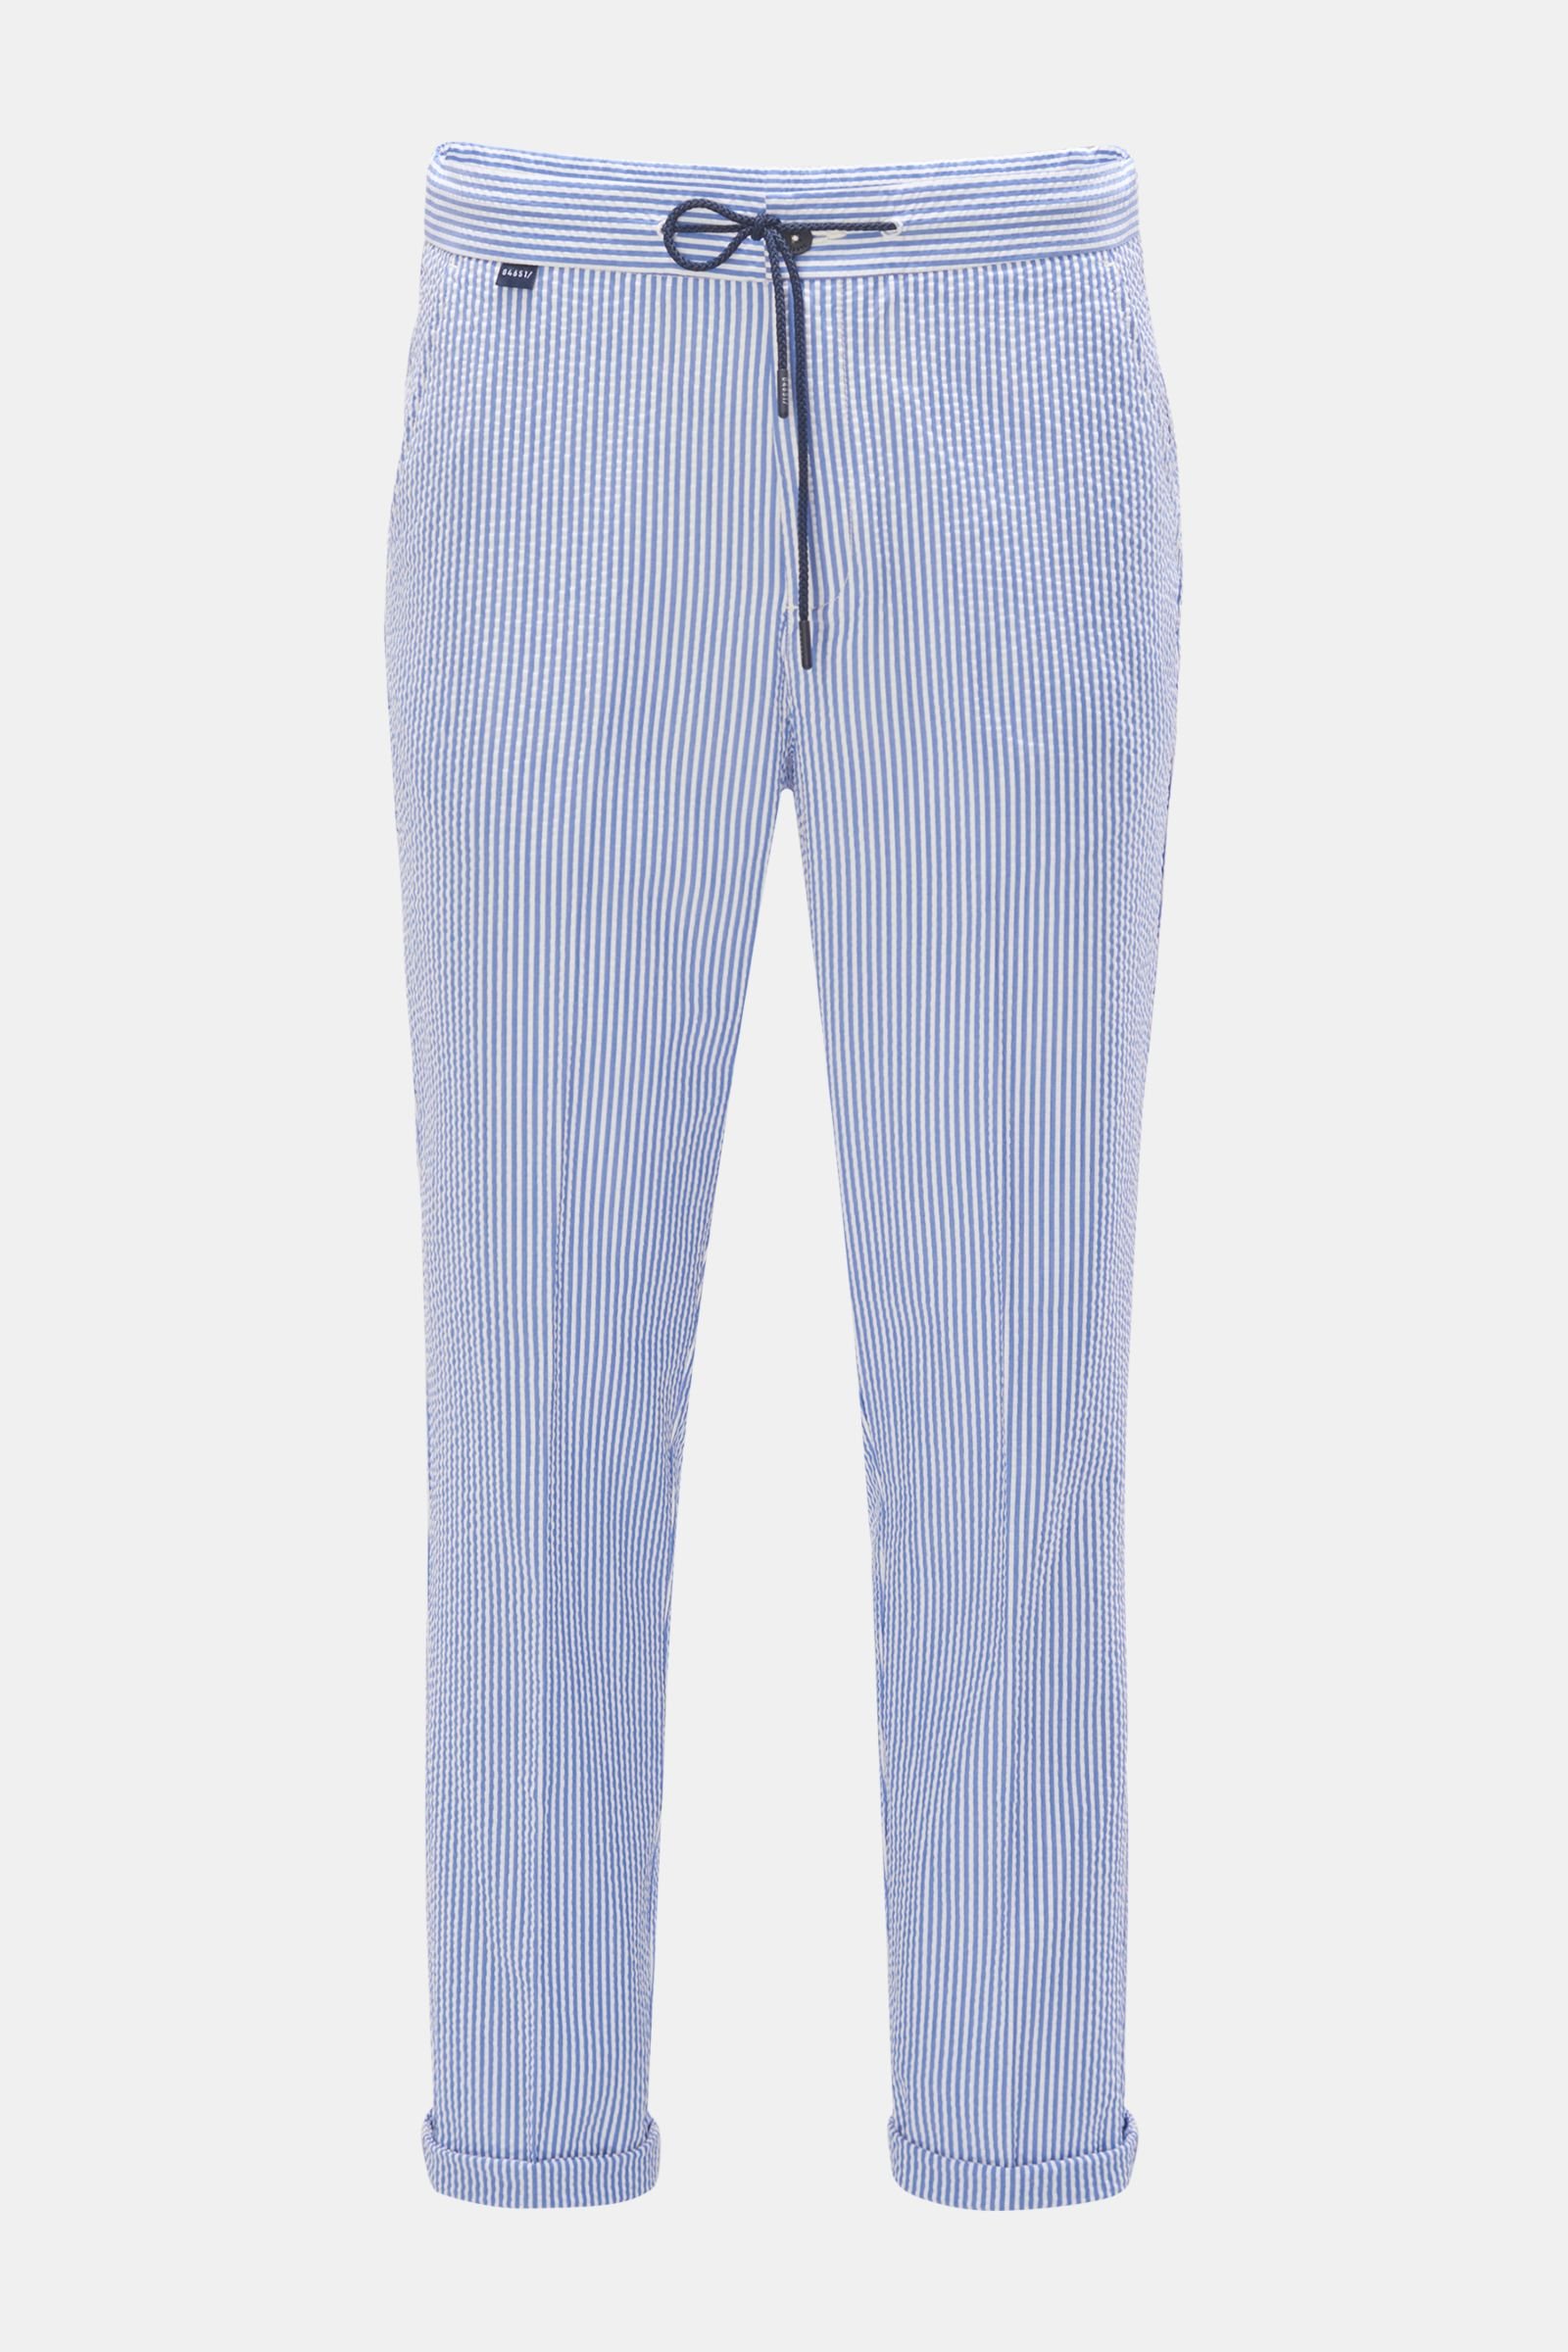 Seersucker jogger pants grey-blue/white striped